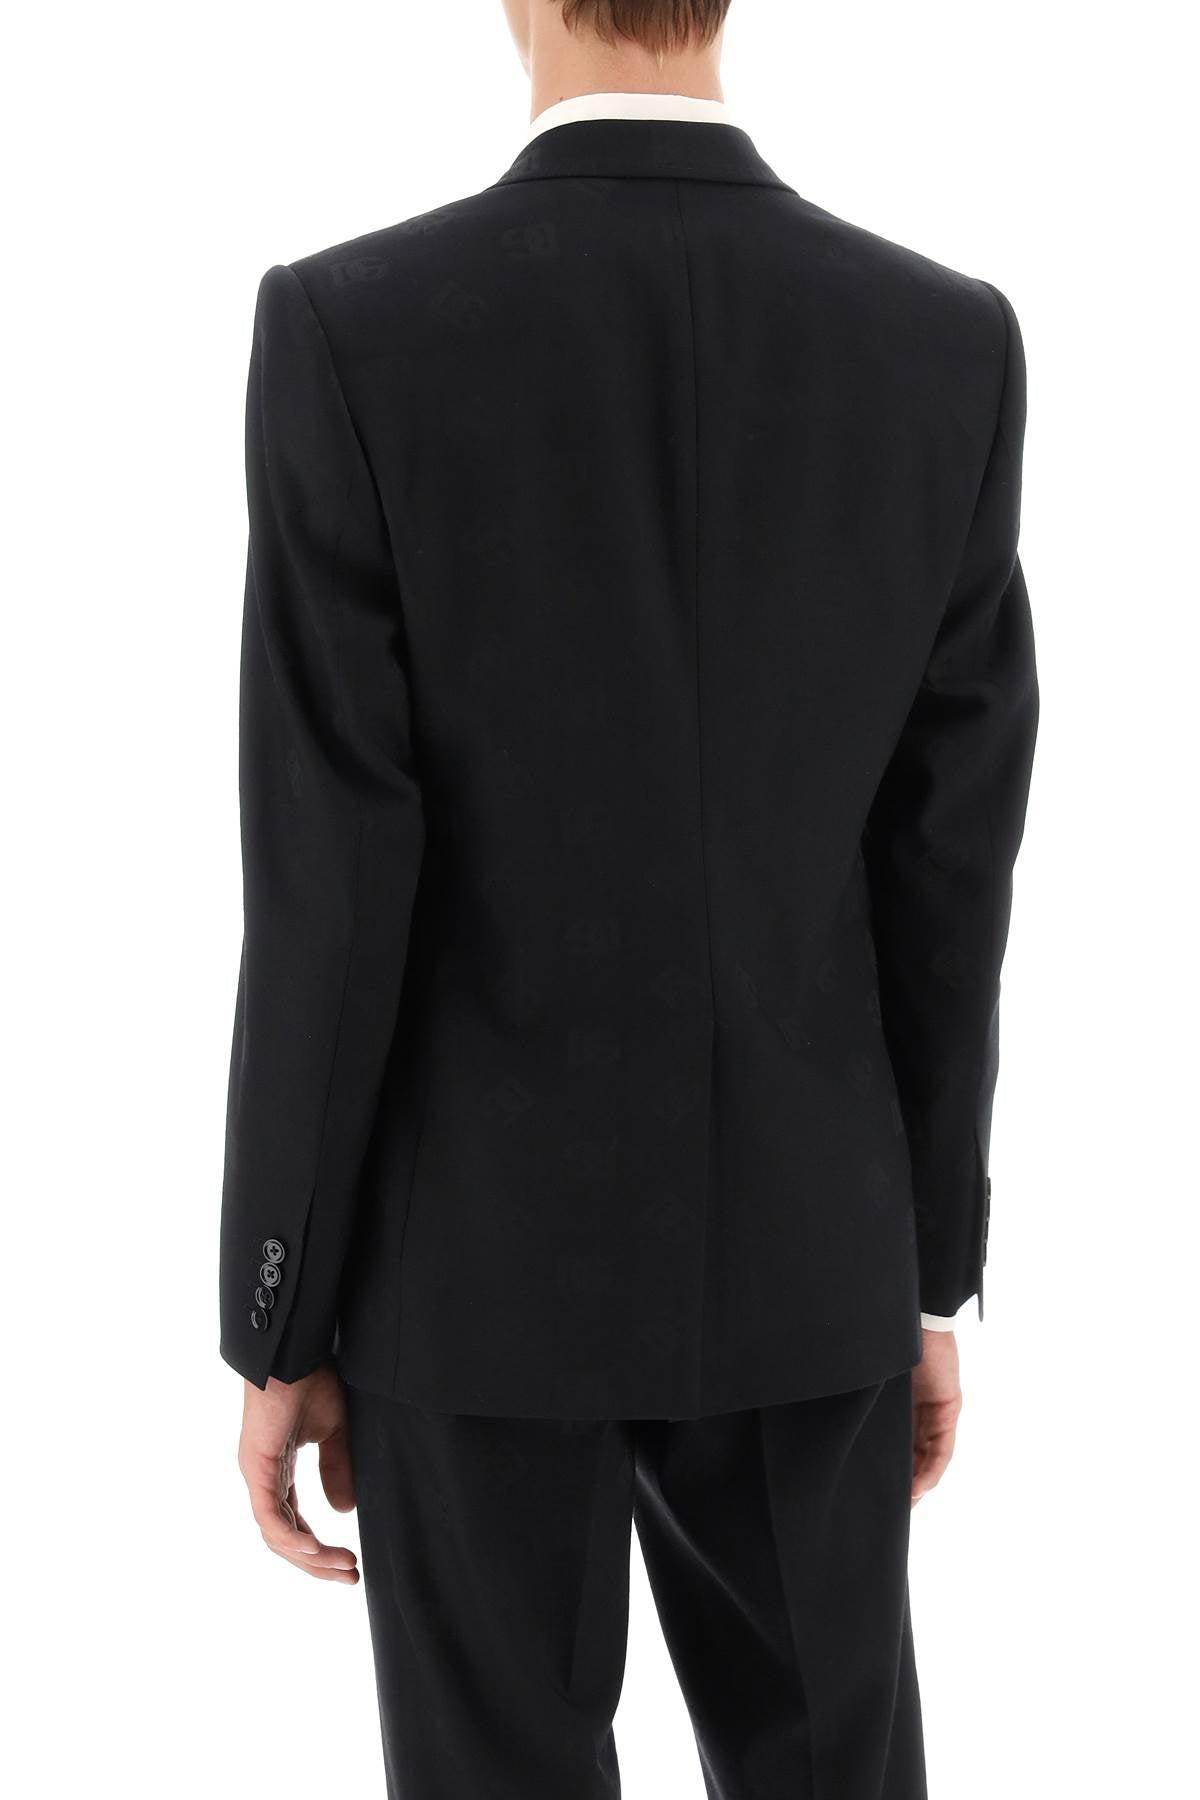 Dolce & Gabbana Sicilia Single Breasted Monogram Jacket in Black for Men